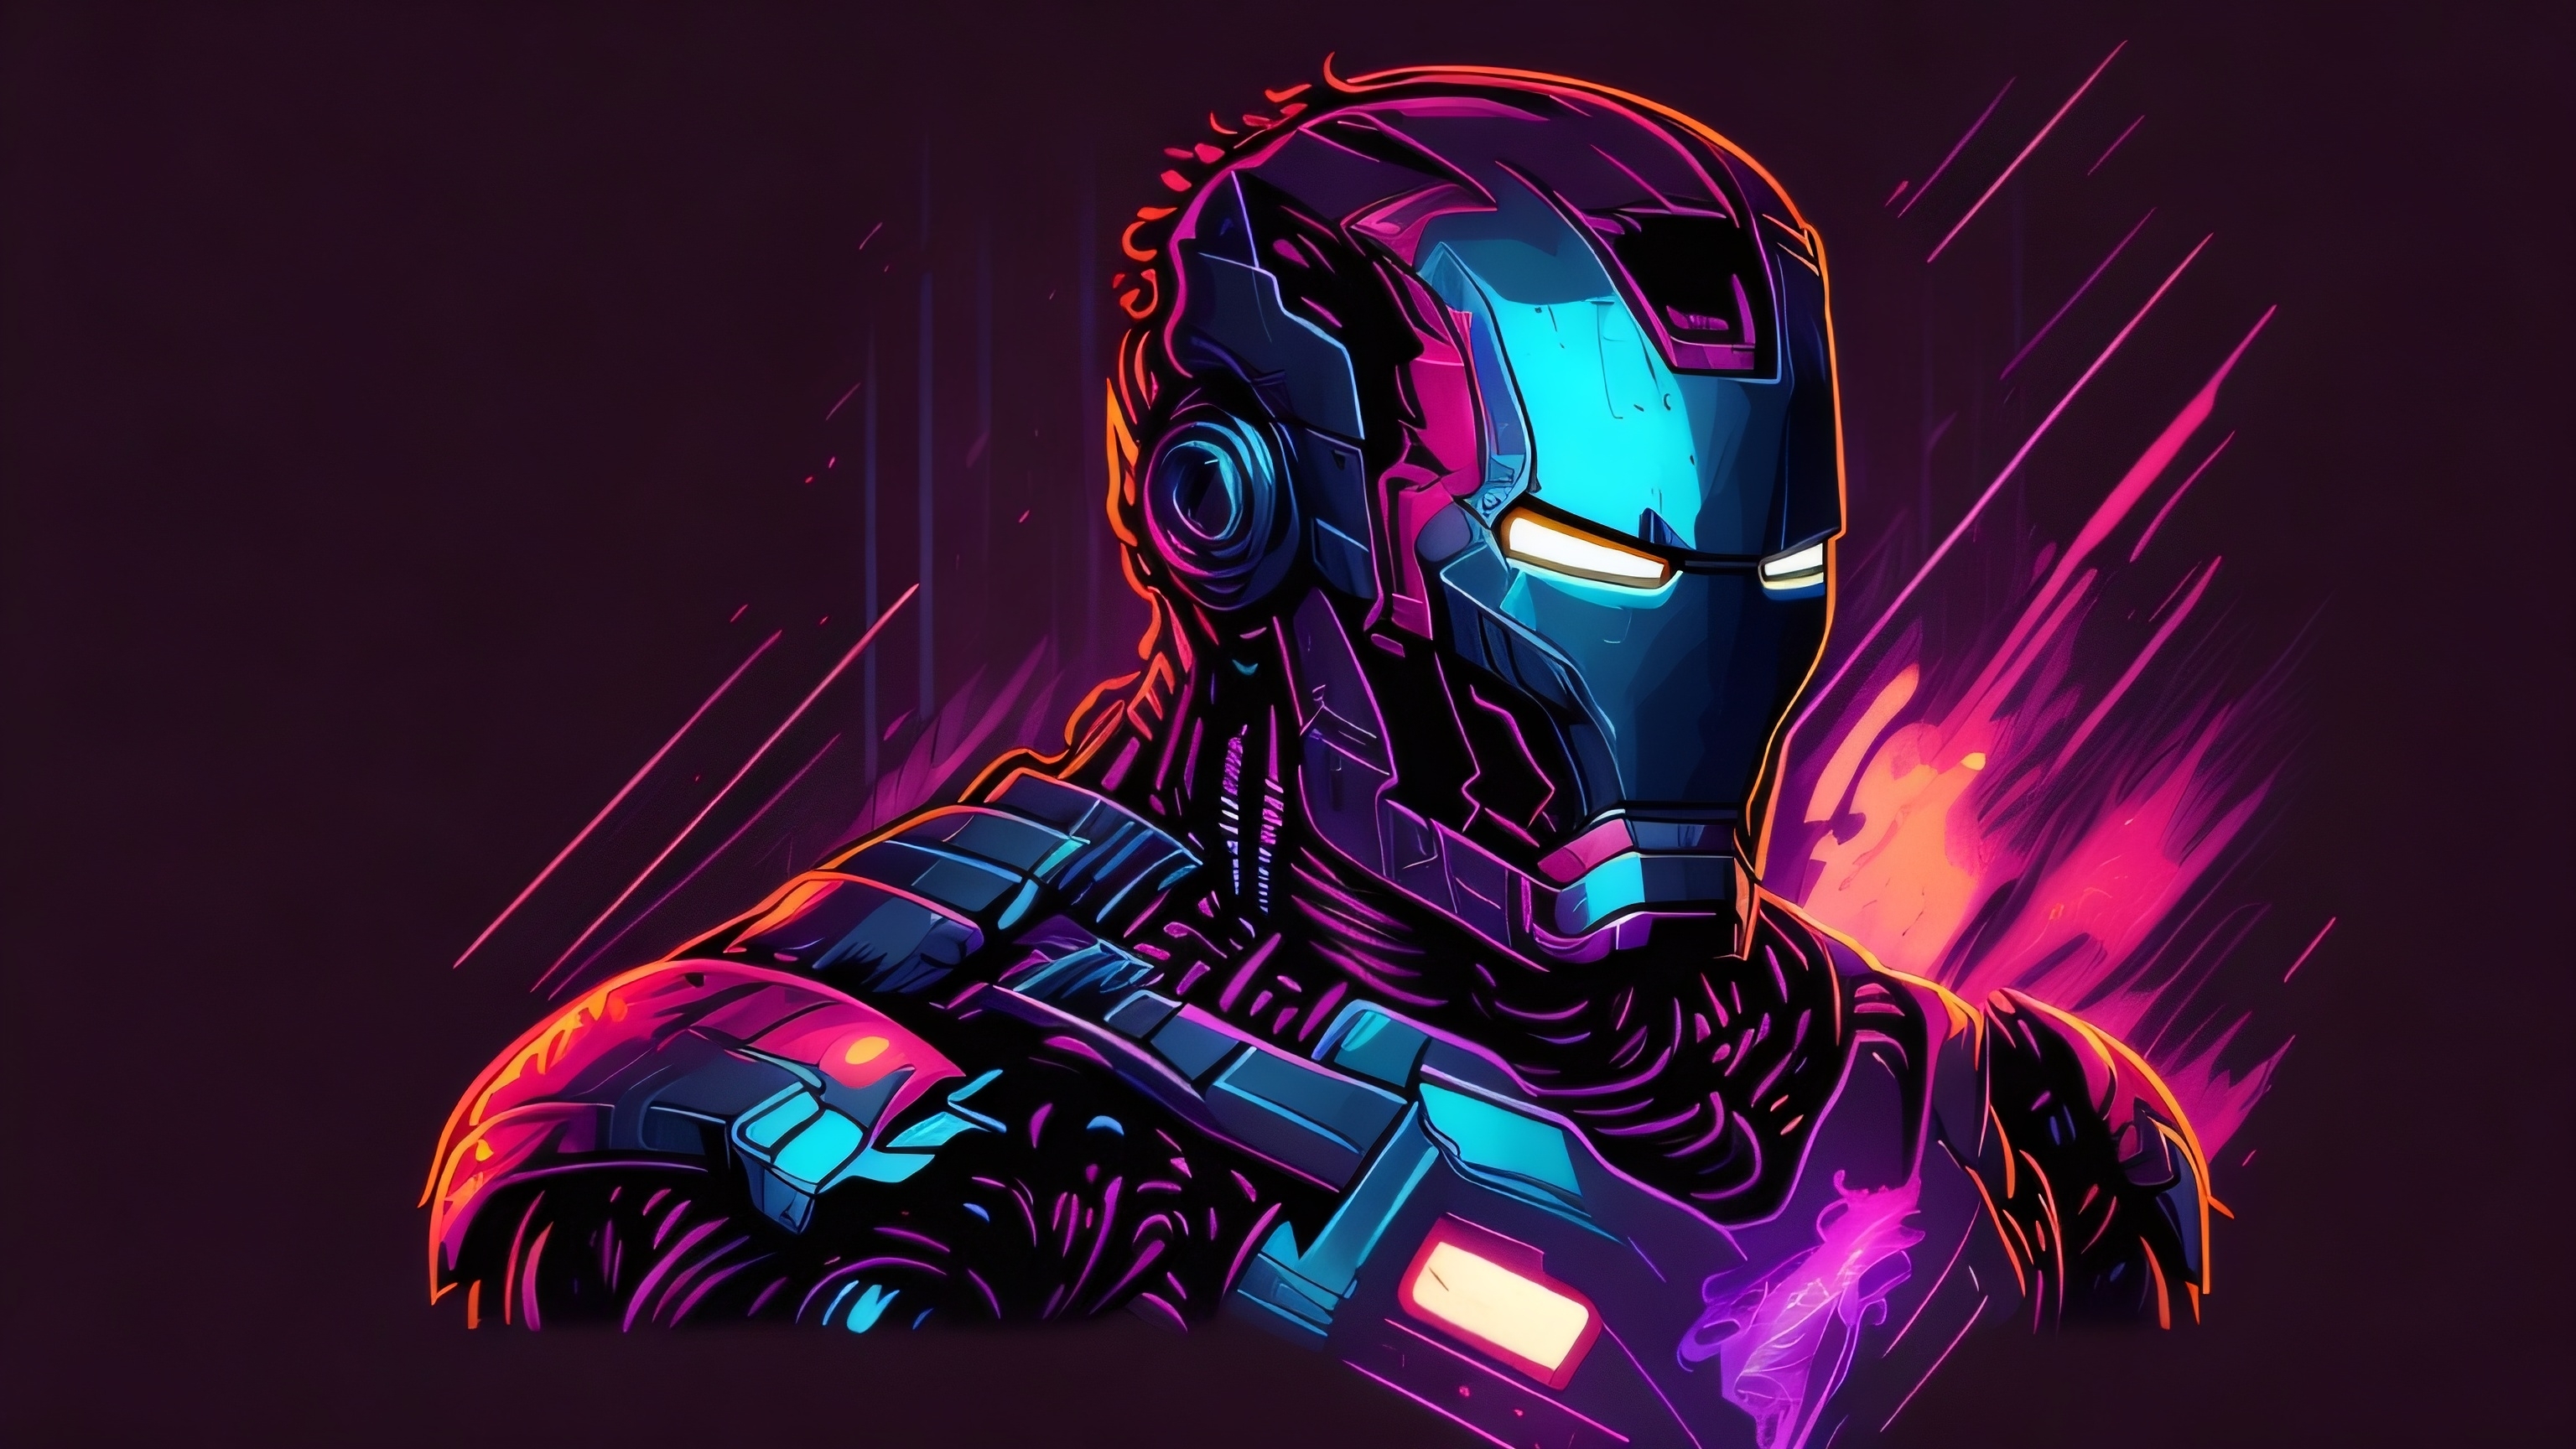 43+] Iron Man Face Wallpapers - WallpaperSafari